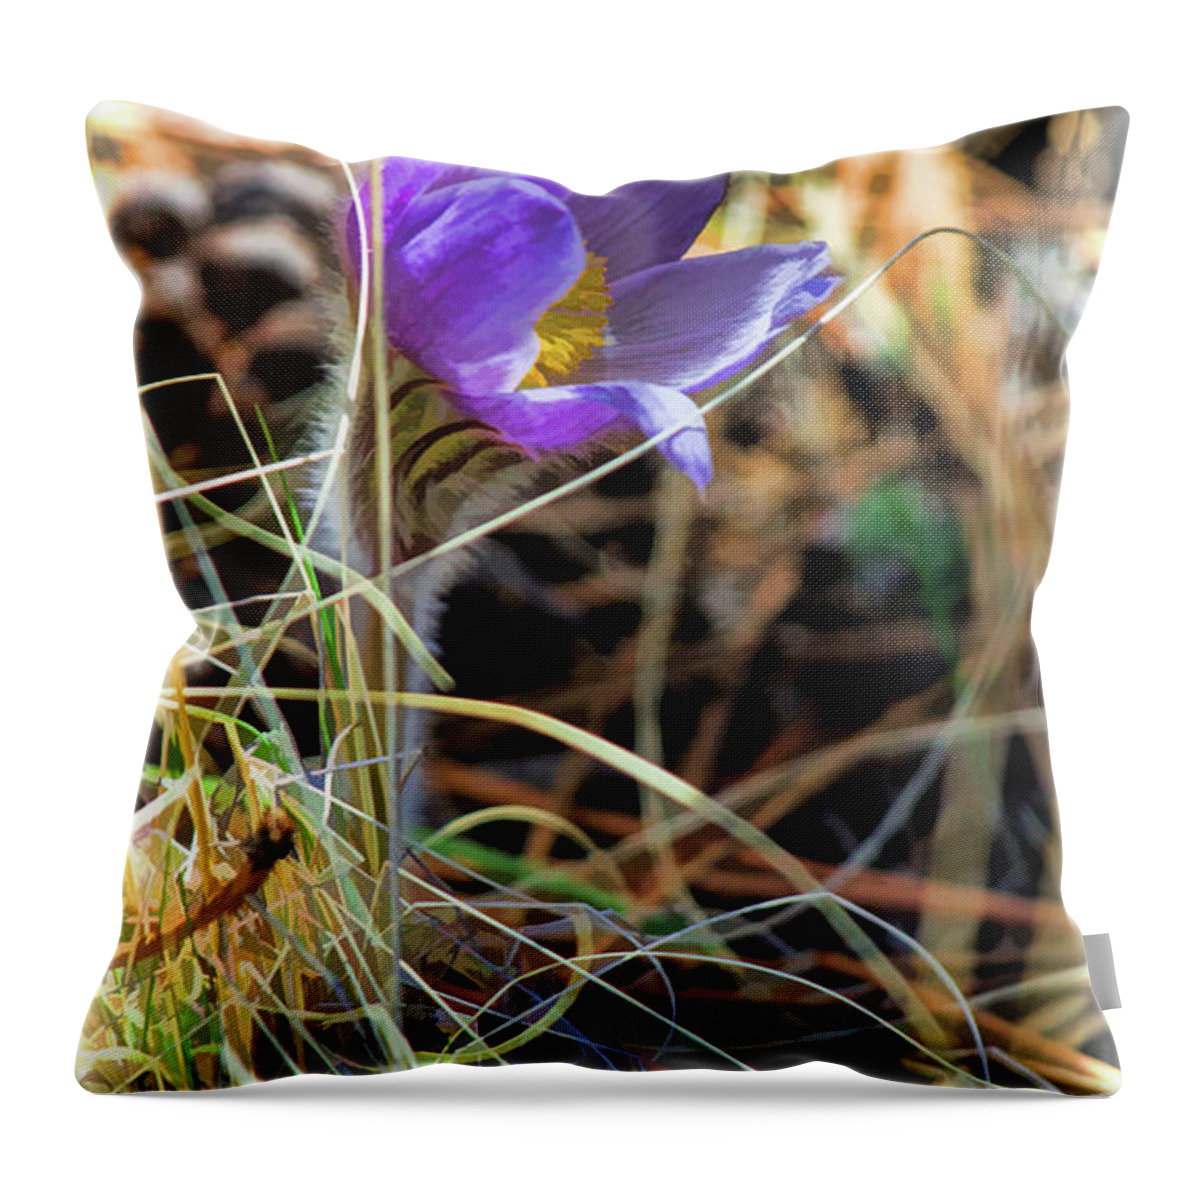 Pasque Flower Throw Pillow featuring the photograph Wild Crocus by Jim Garrison